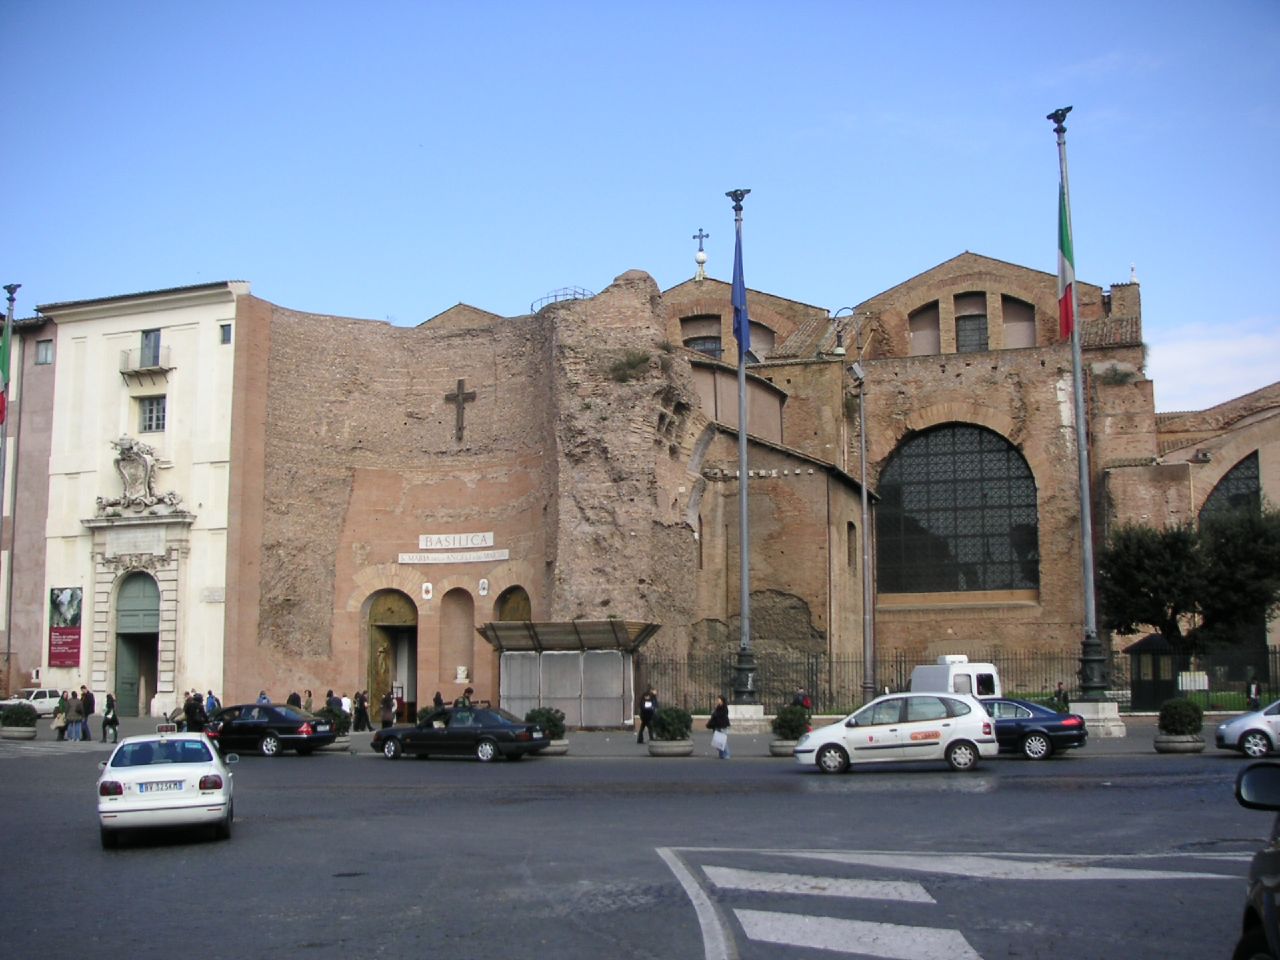 Базилика Санта-Мария-дельи-Анджели-э-деи-Мартири